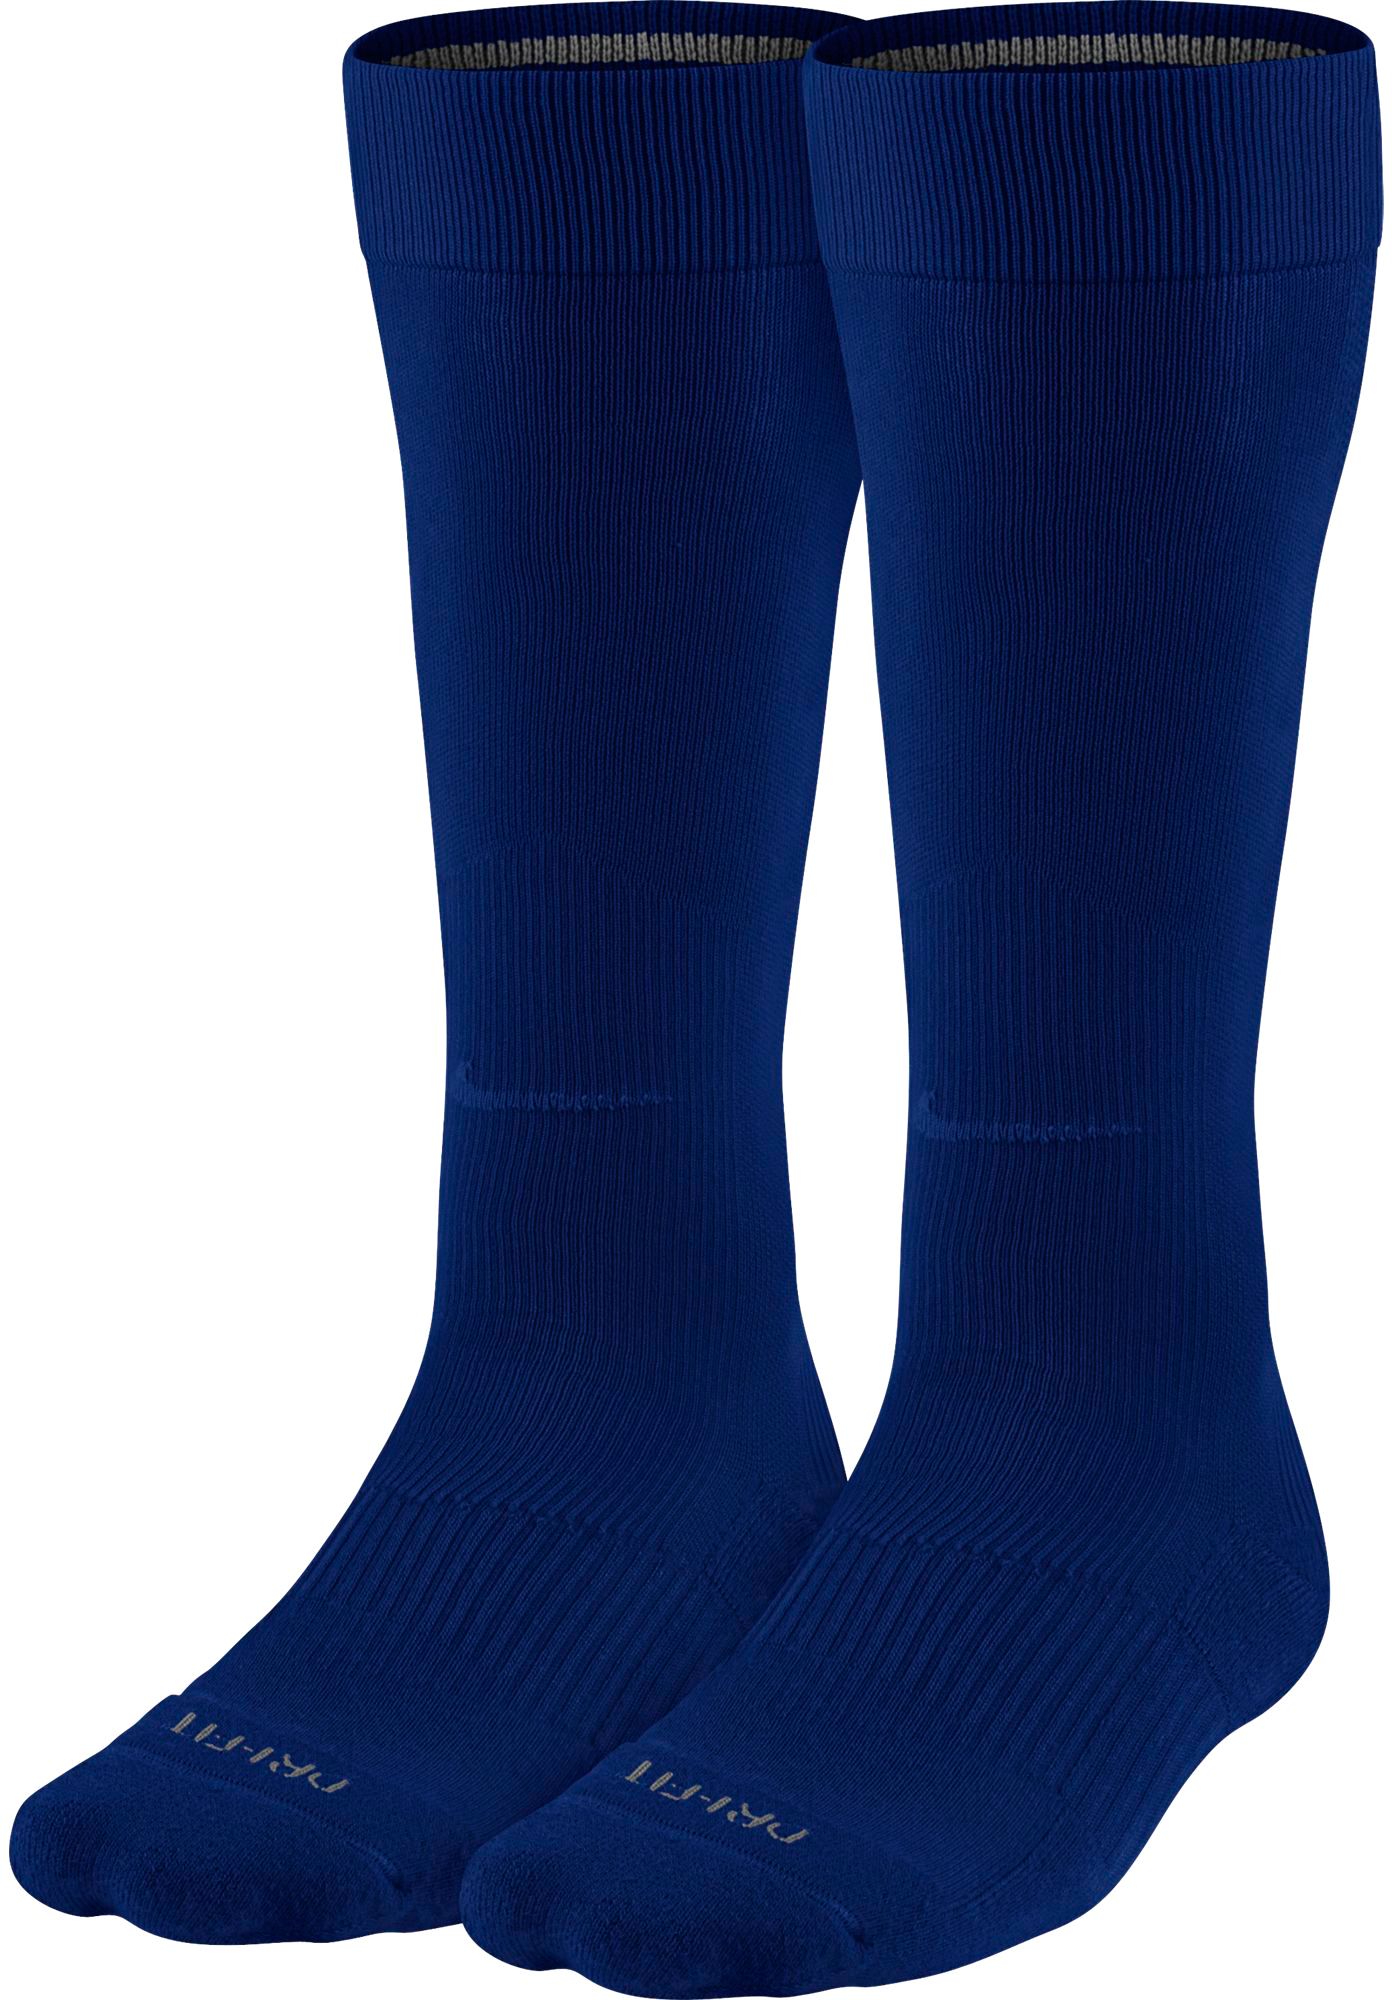 nike socks navy blue